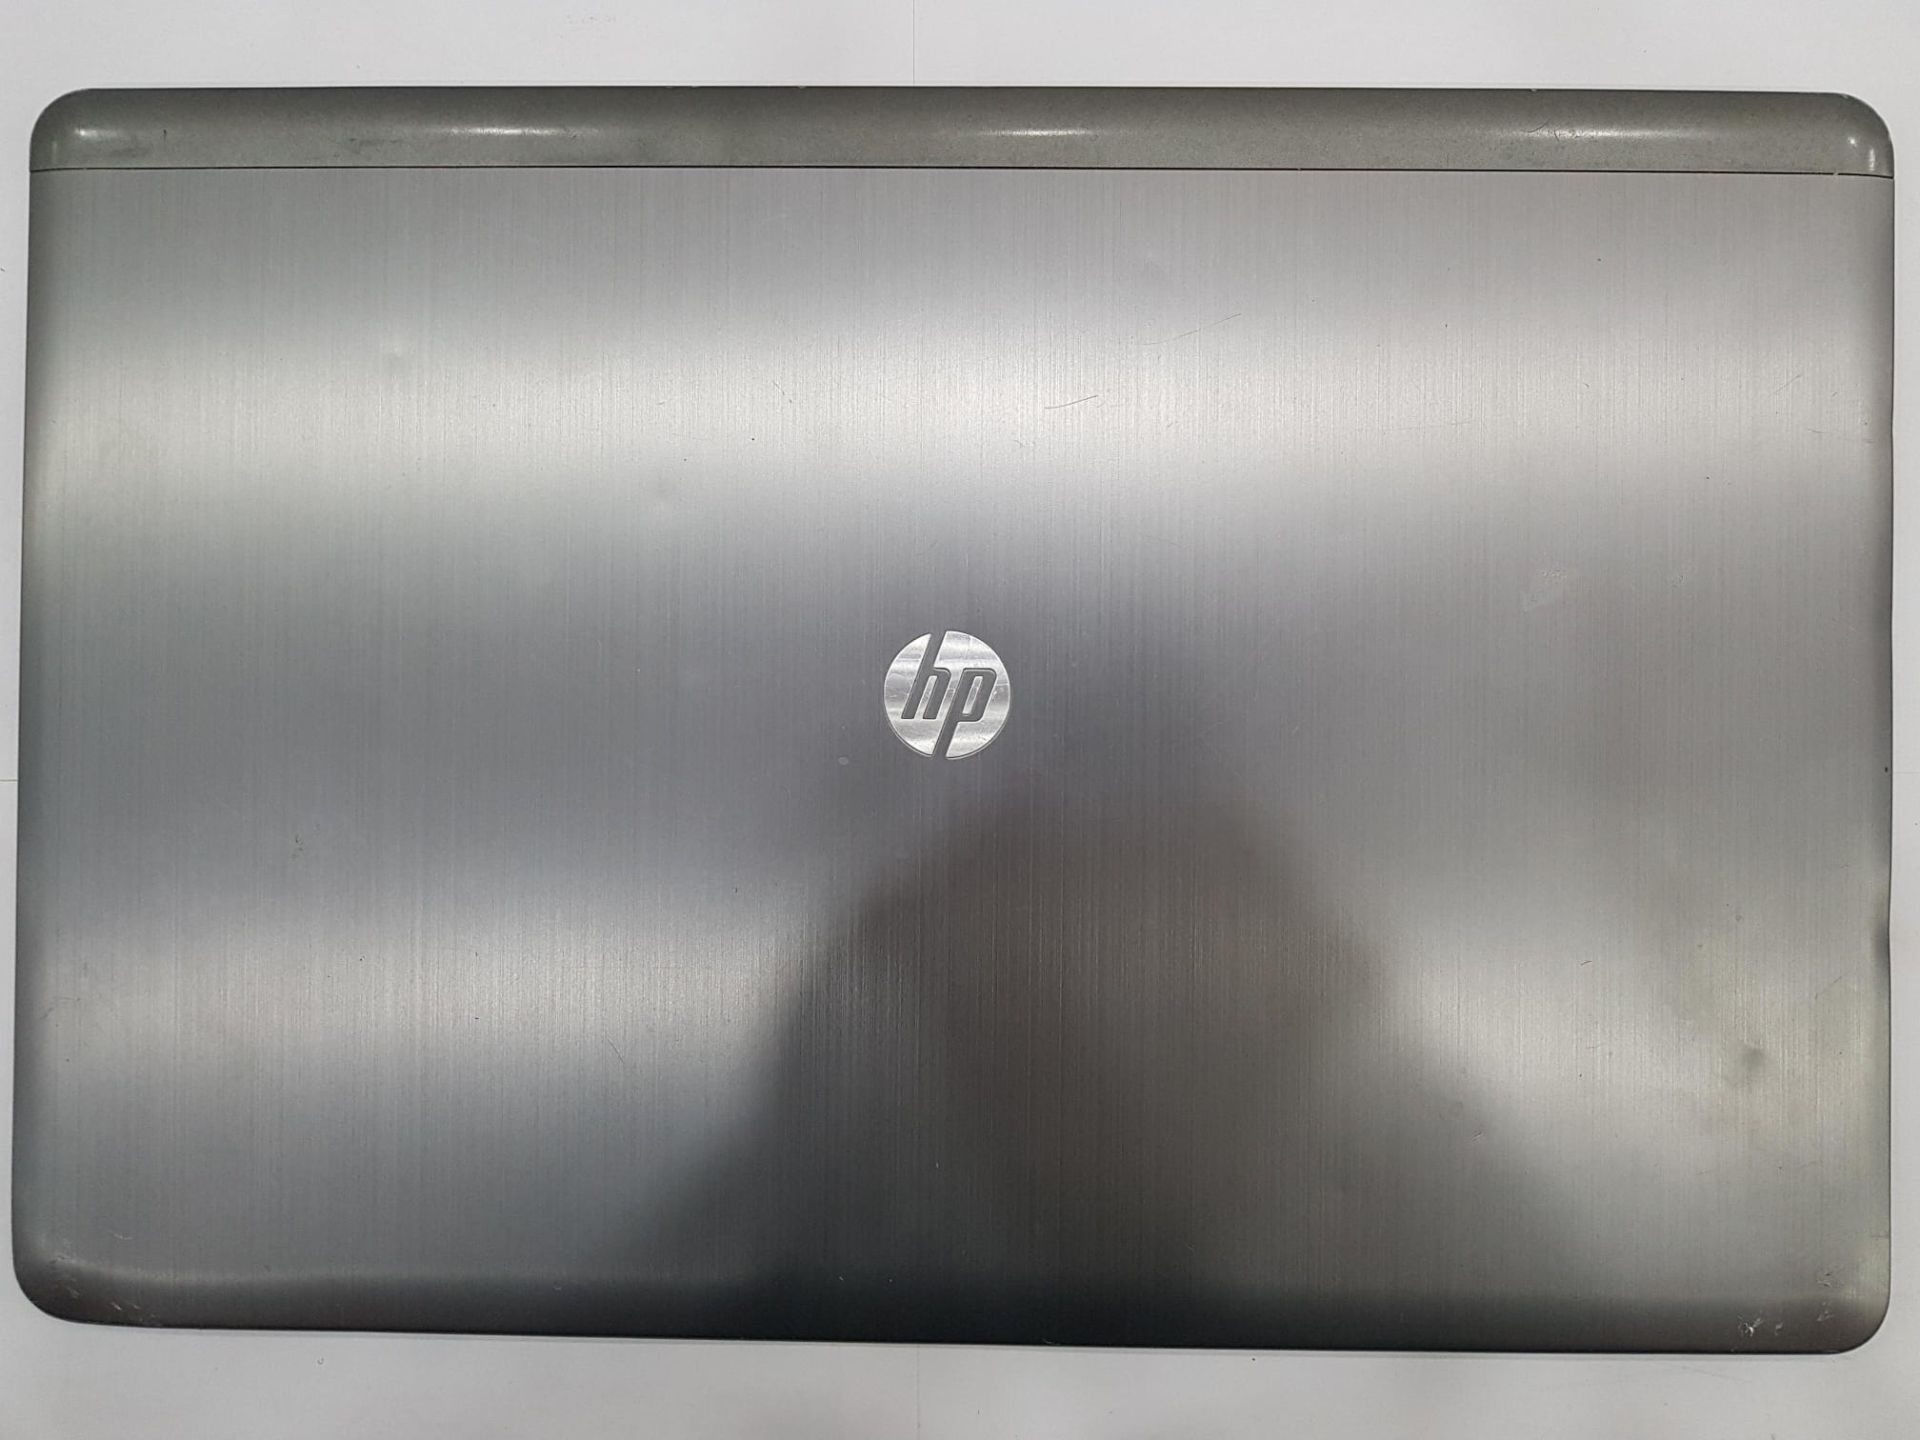 En ucuz 2. EL - HP PROBOOK 4520S 42.4SJ15.001  LCD EKRAN BACK ARKA COVER bayi satışı